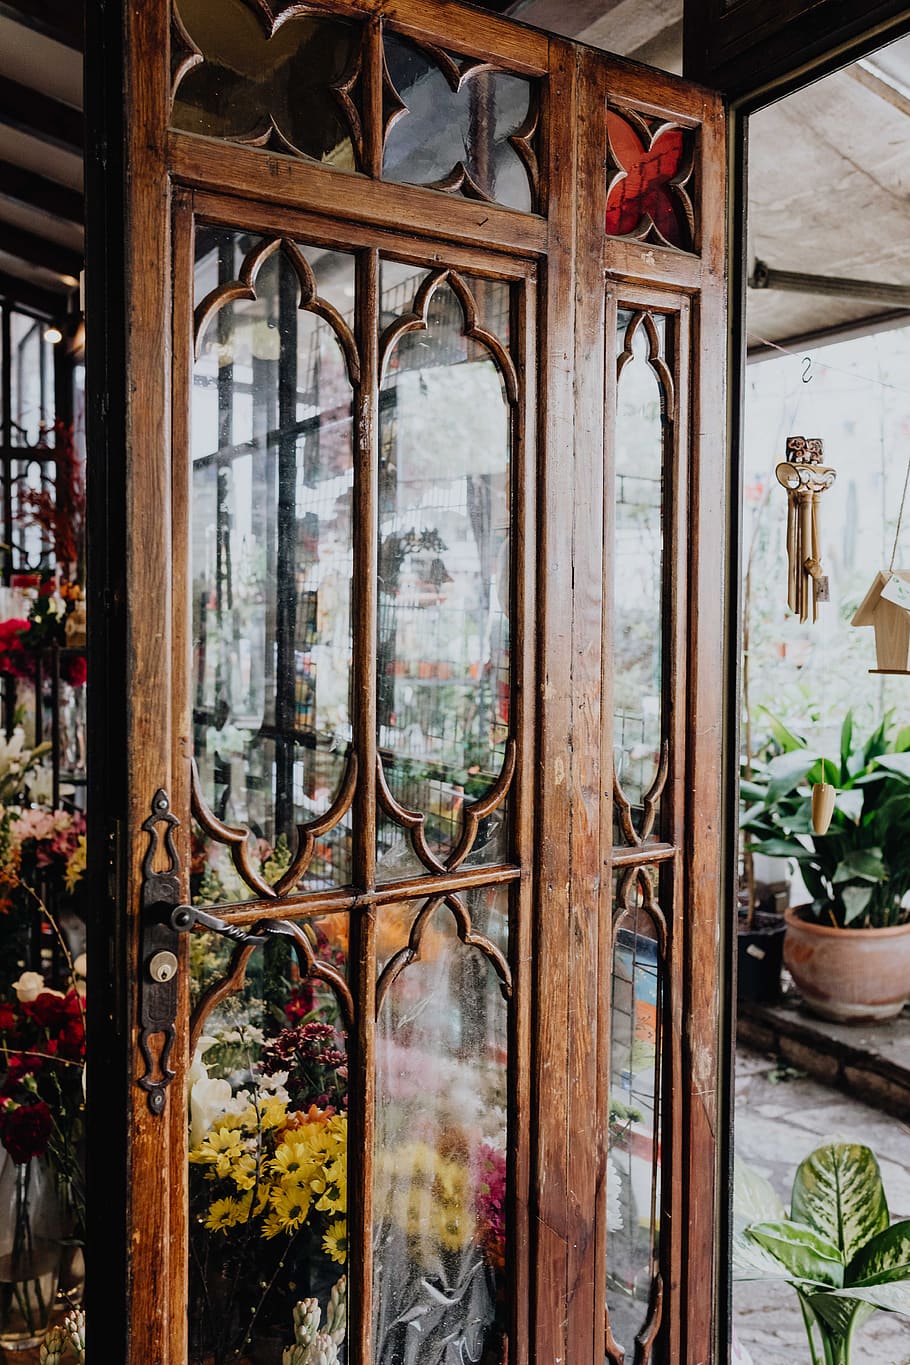 shop, flowers, florist, flora, plants, Flower, shops, Madrid, Spain, window